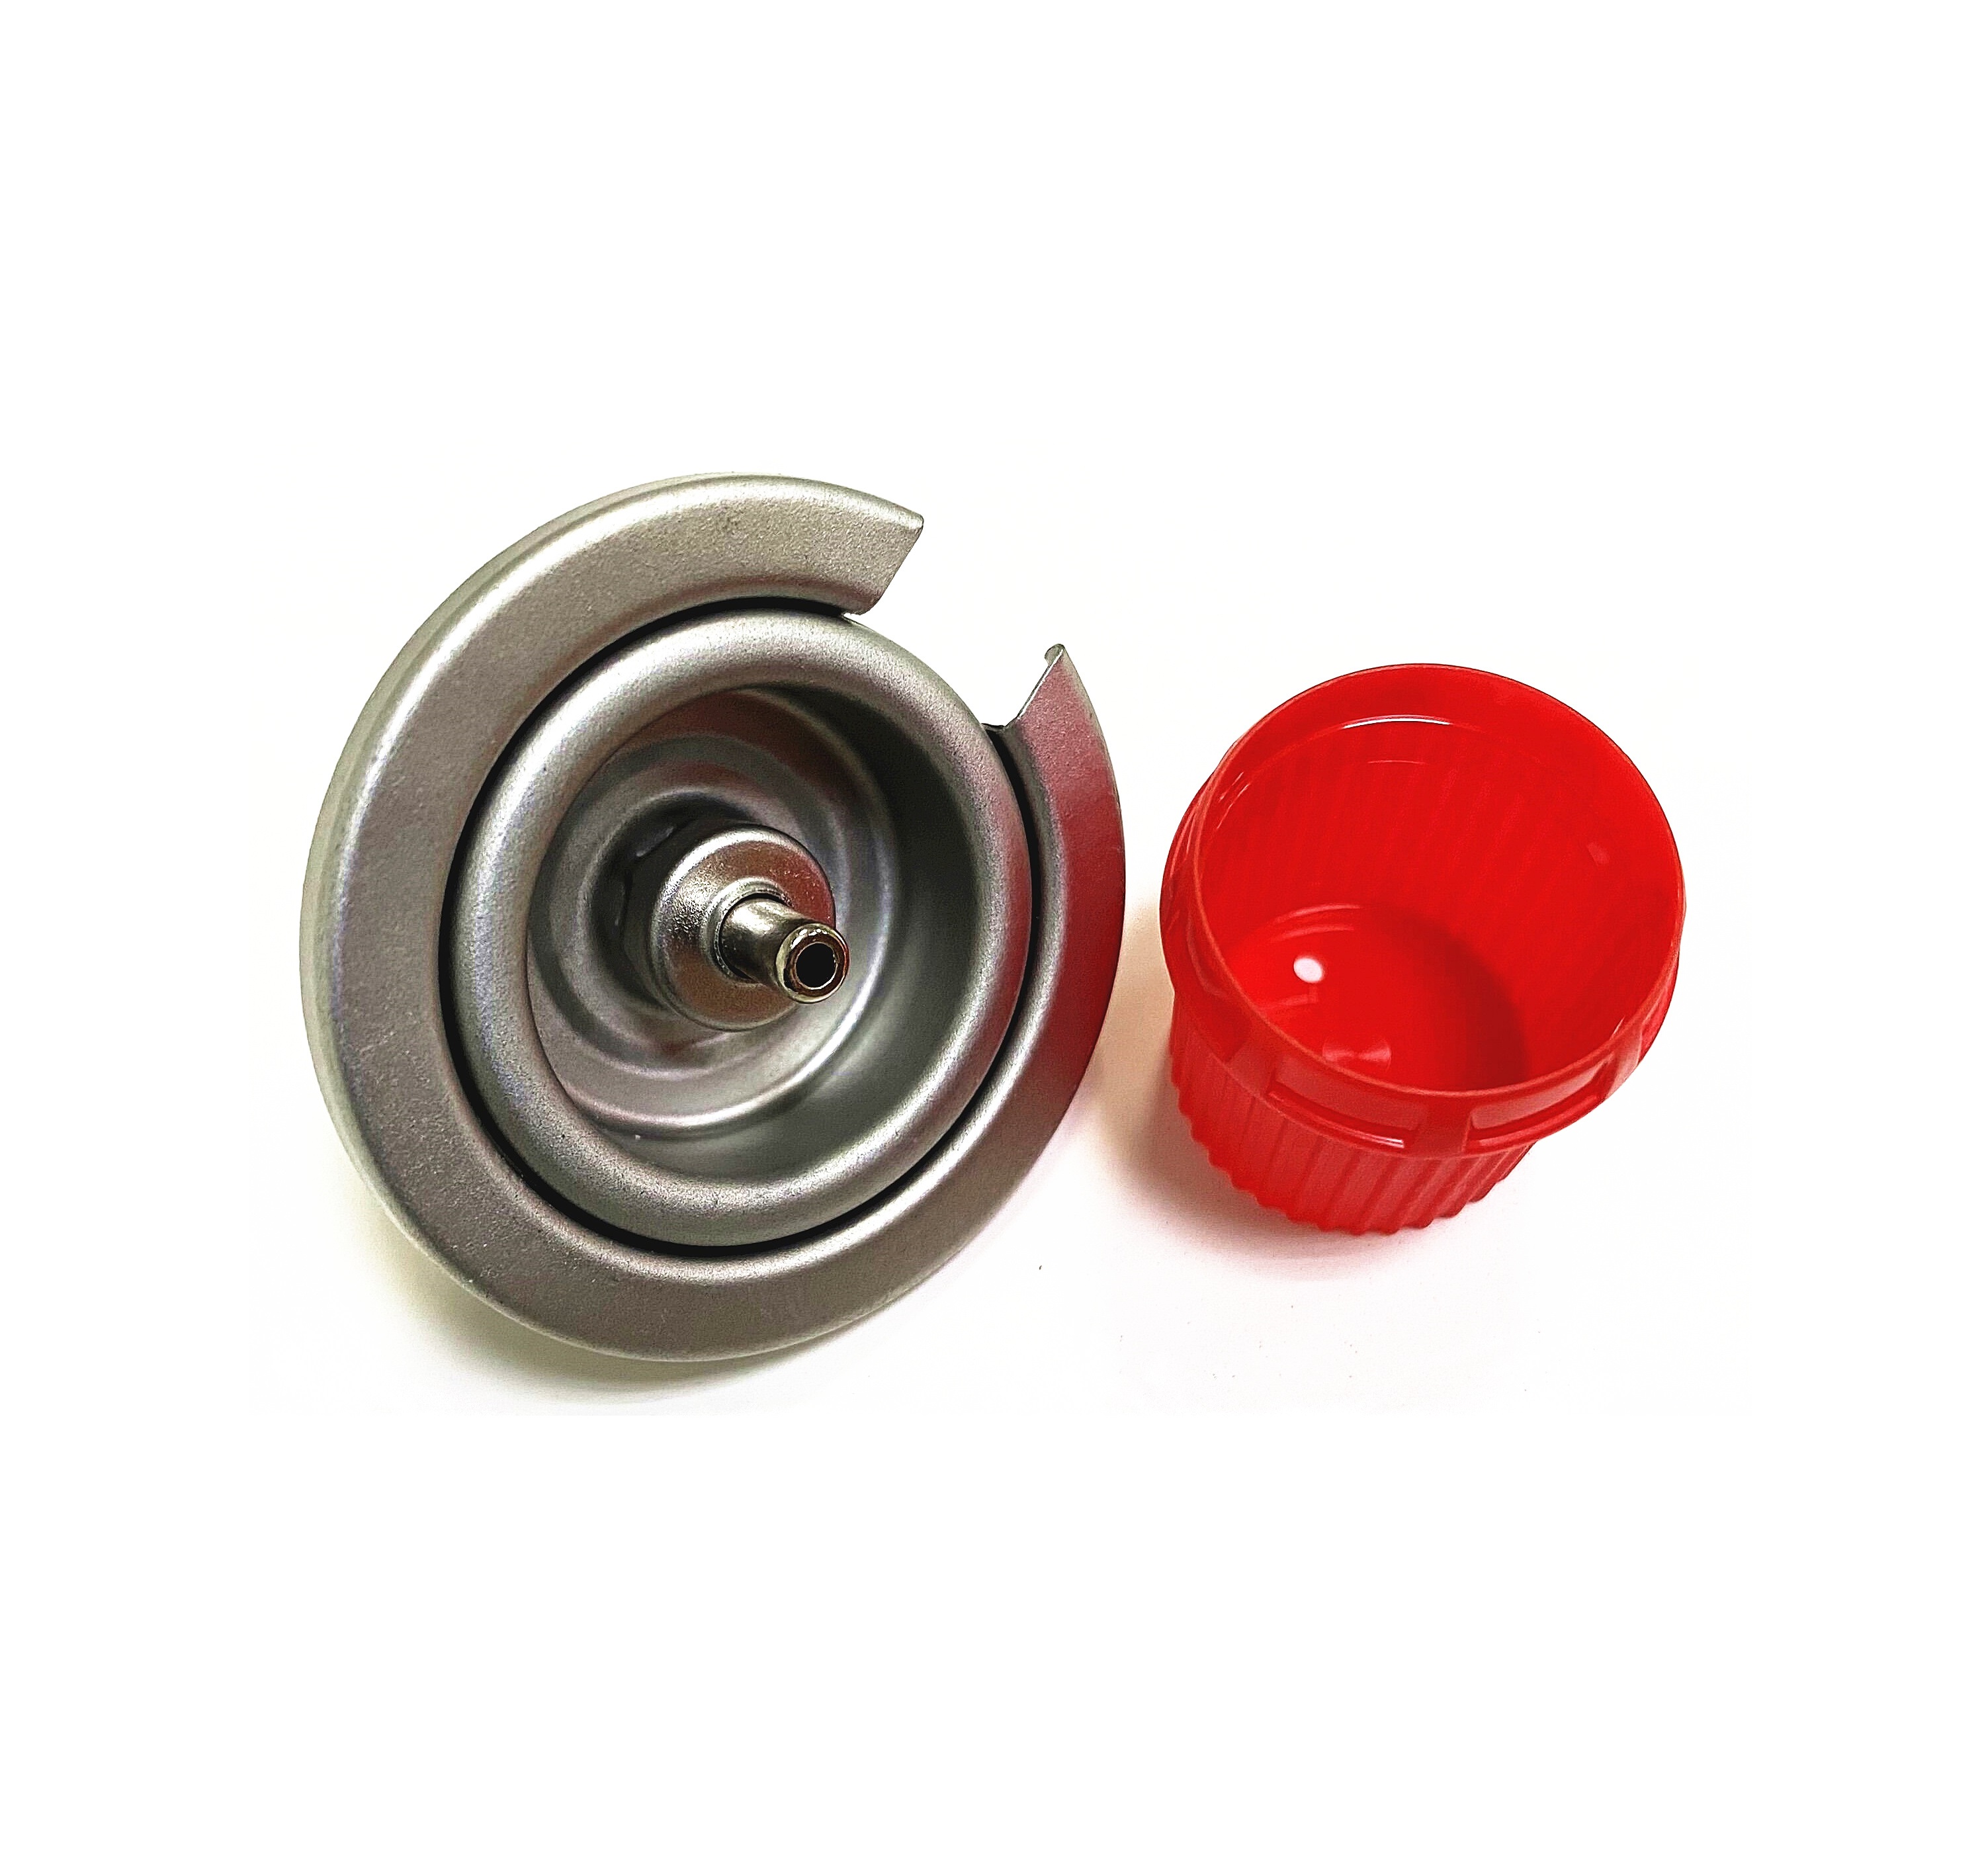 Tapa y válvula roja para lata de gas butano